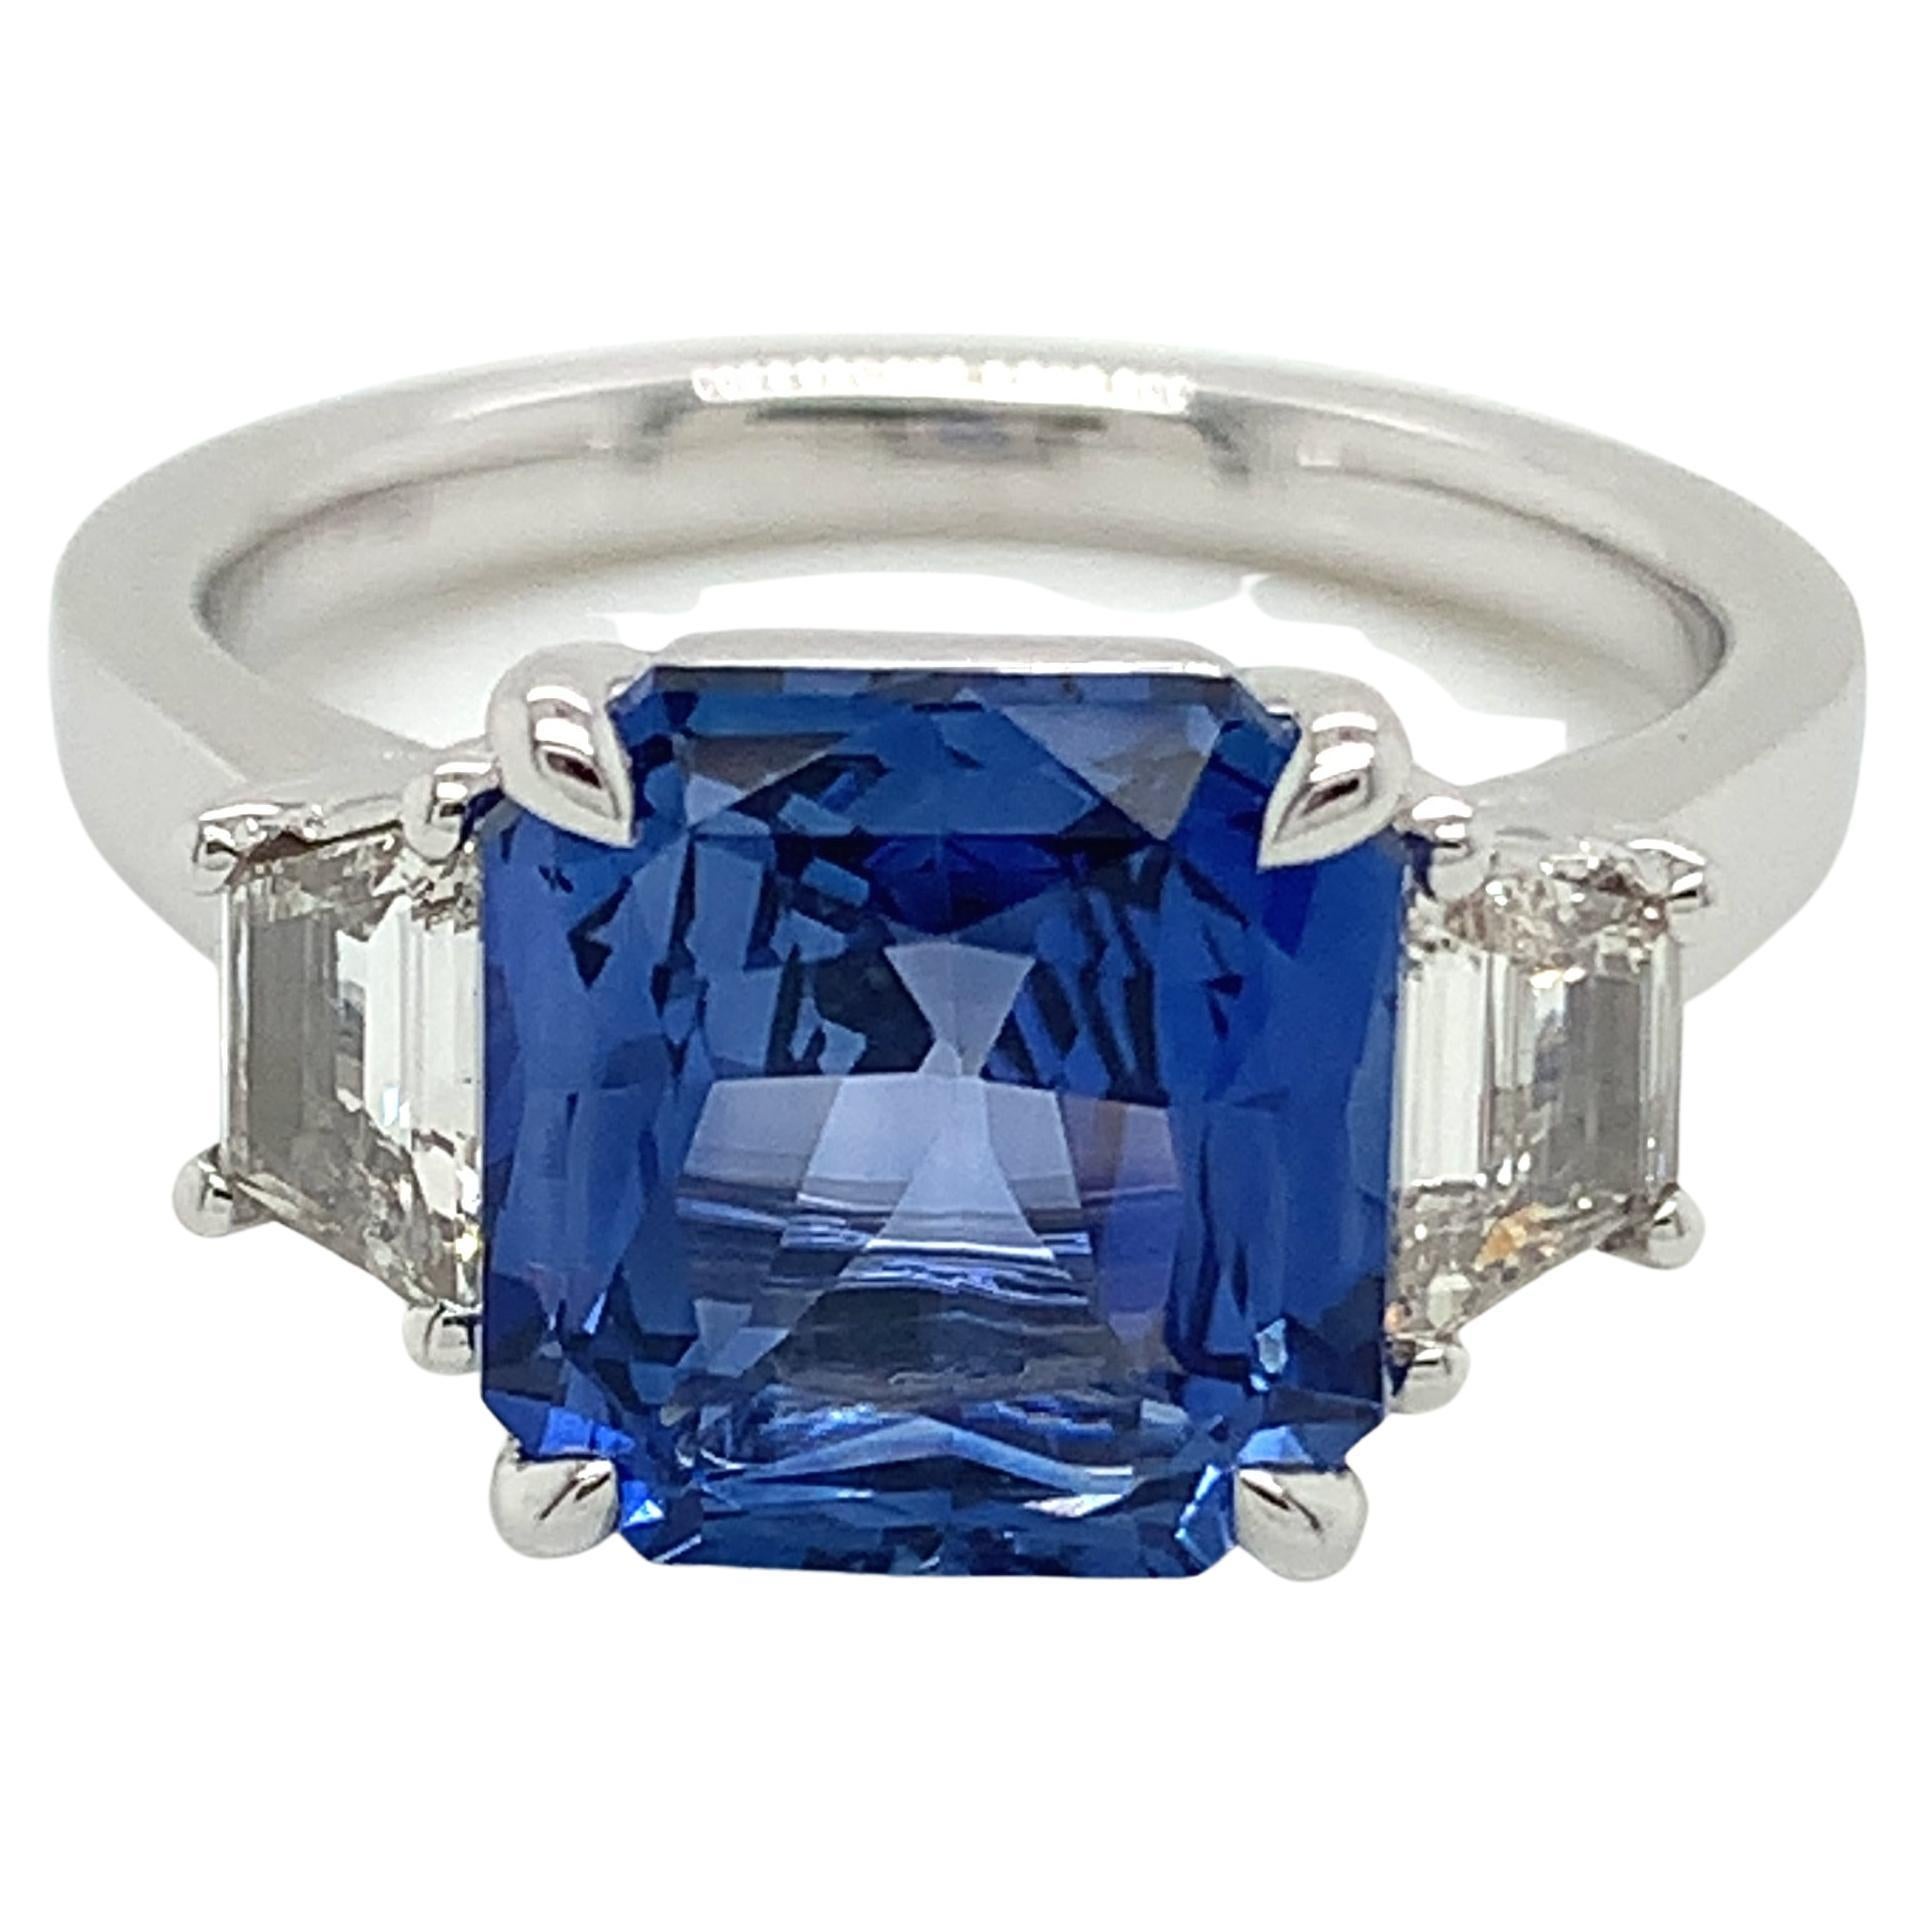 5.10 Carat Ceylon Sapphire & Diamond Ring in Platinum